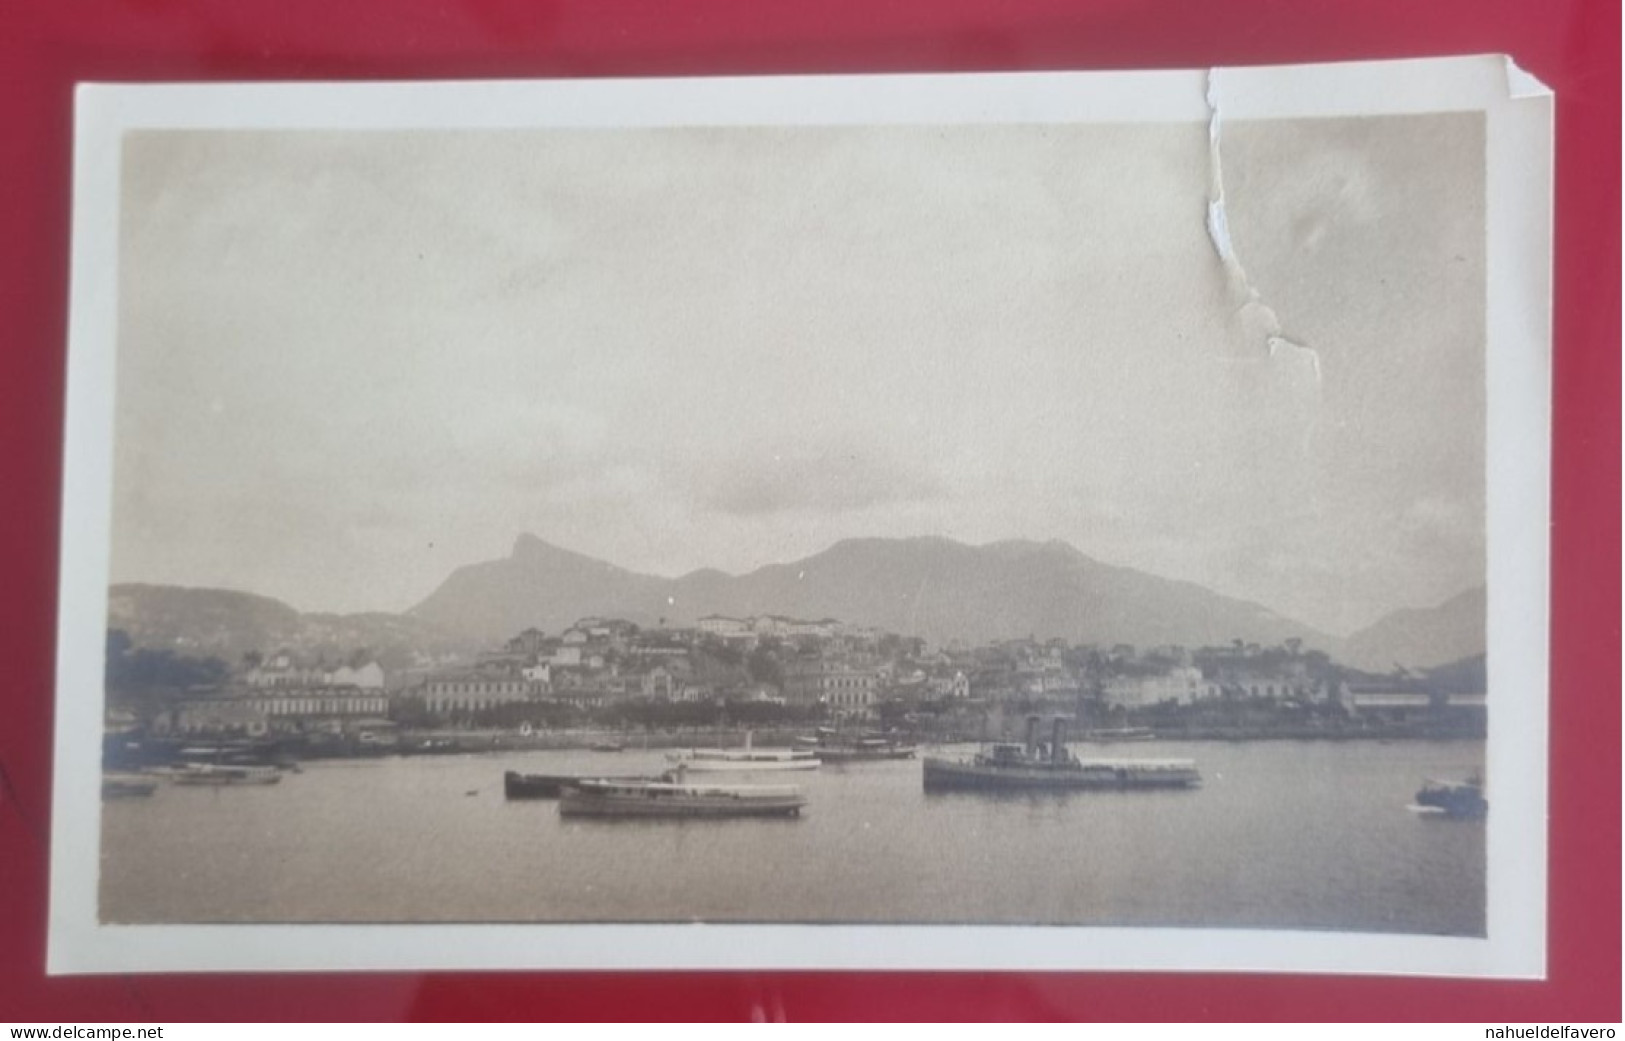 PH - Ph Original - Grands Navires Quittant La Ville De Rio De Janeiro, 1925 - Boats